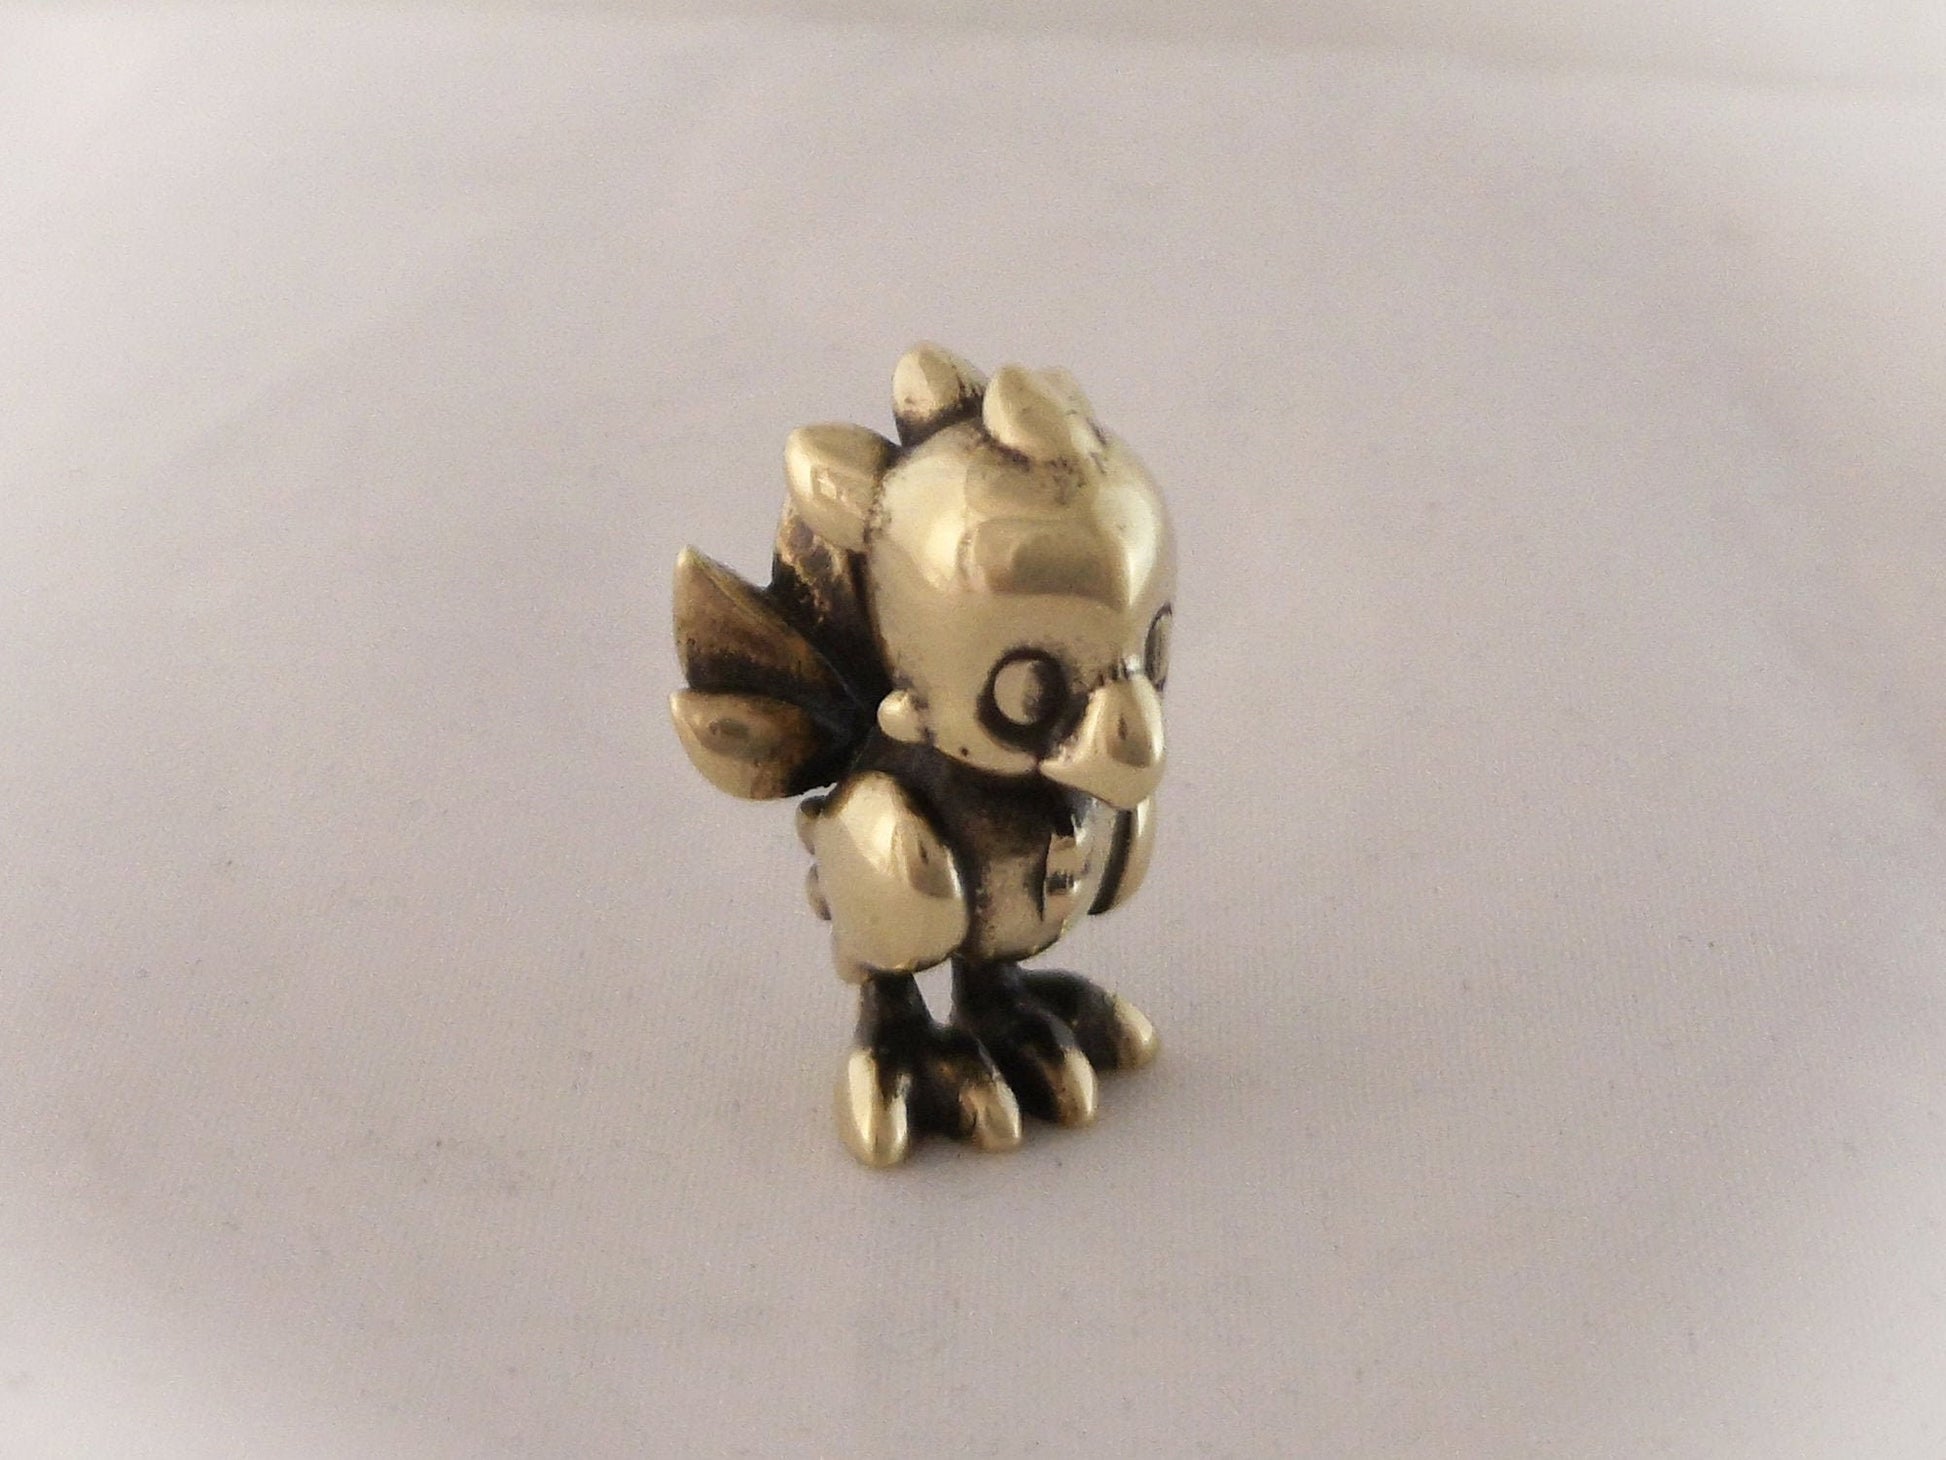 Final Fantasy Chocobo High Polished Metal Miniature Statue from Brass - Baldur Jewelry